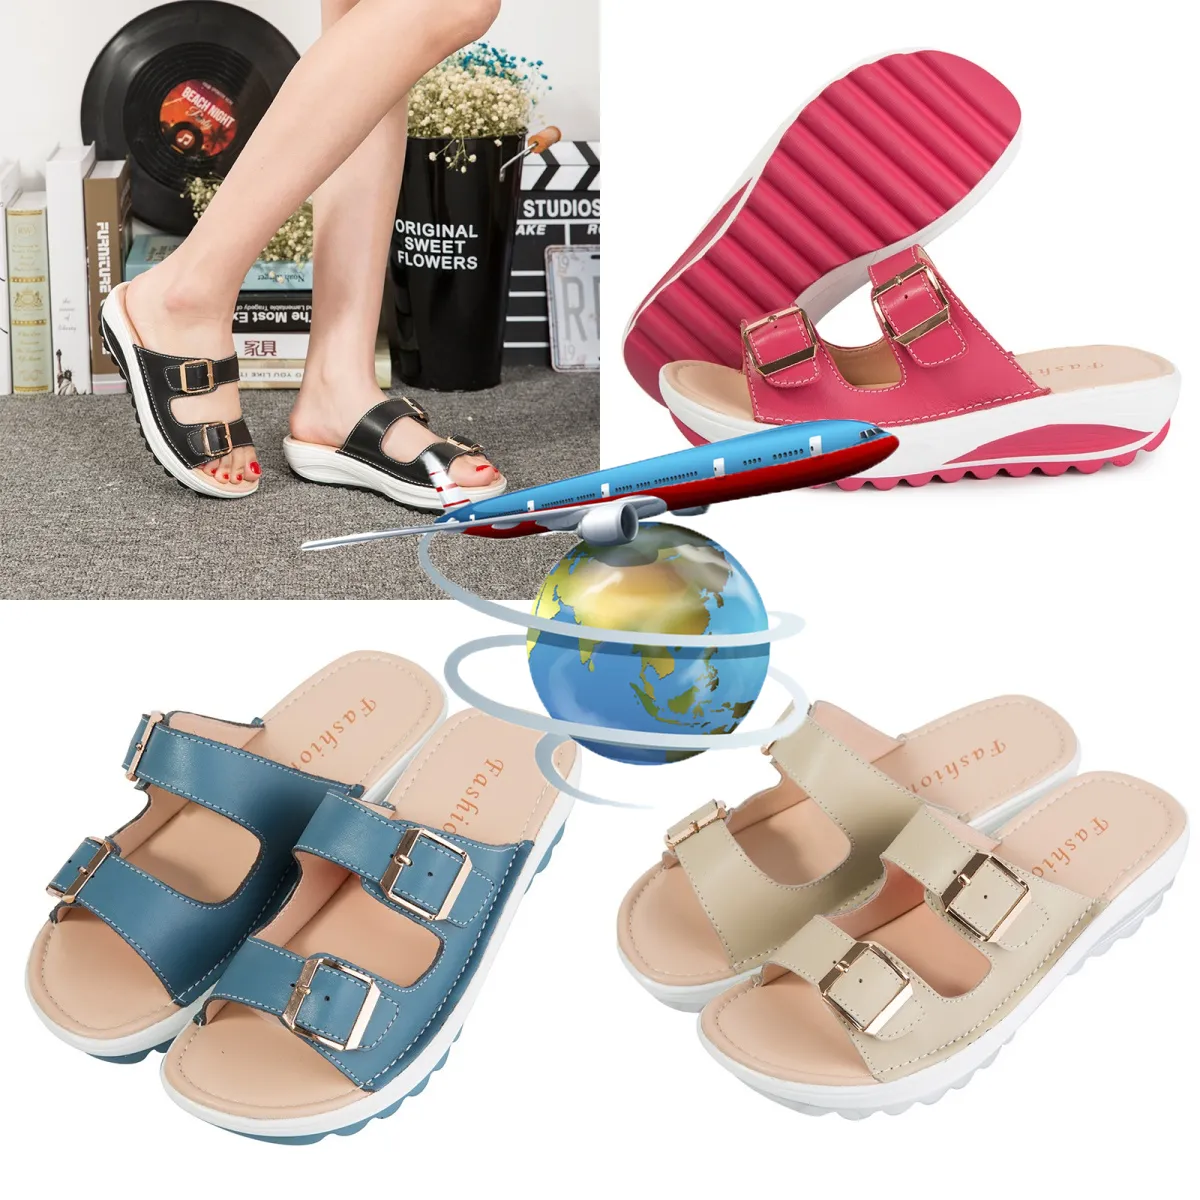 New Sandals Women Summer Fashion Beach shoes Flip-flops sandals flat bottomed slippers Beach Shoes GAI eur 35-42